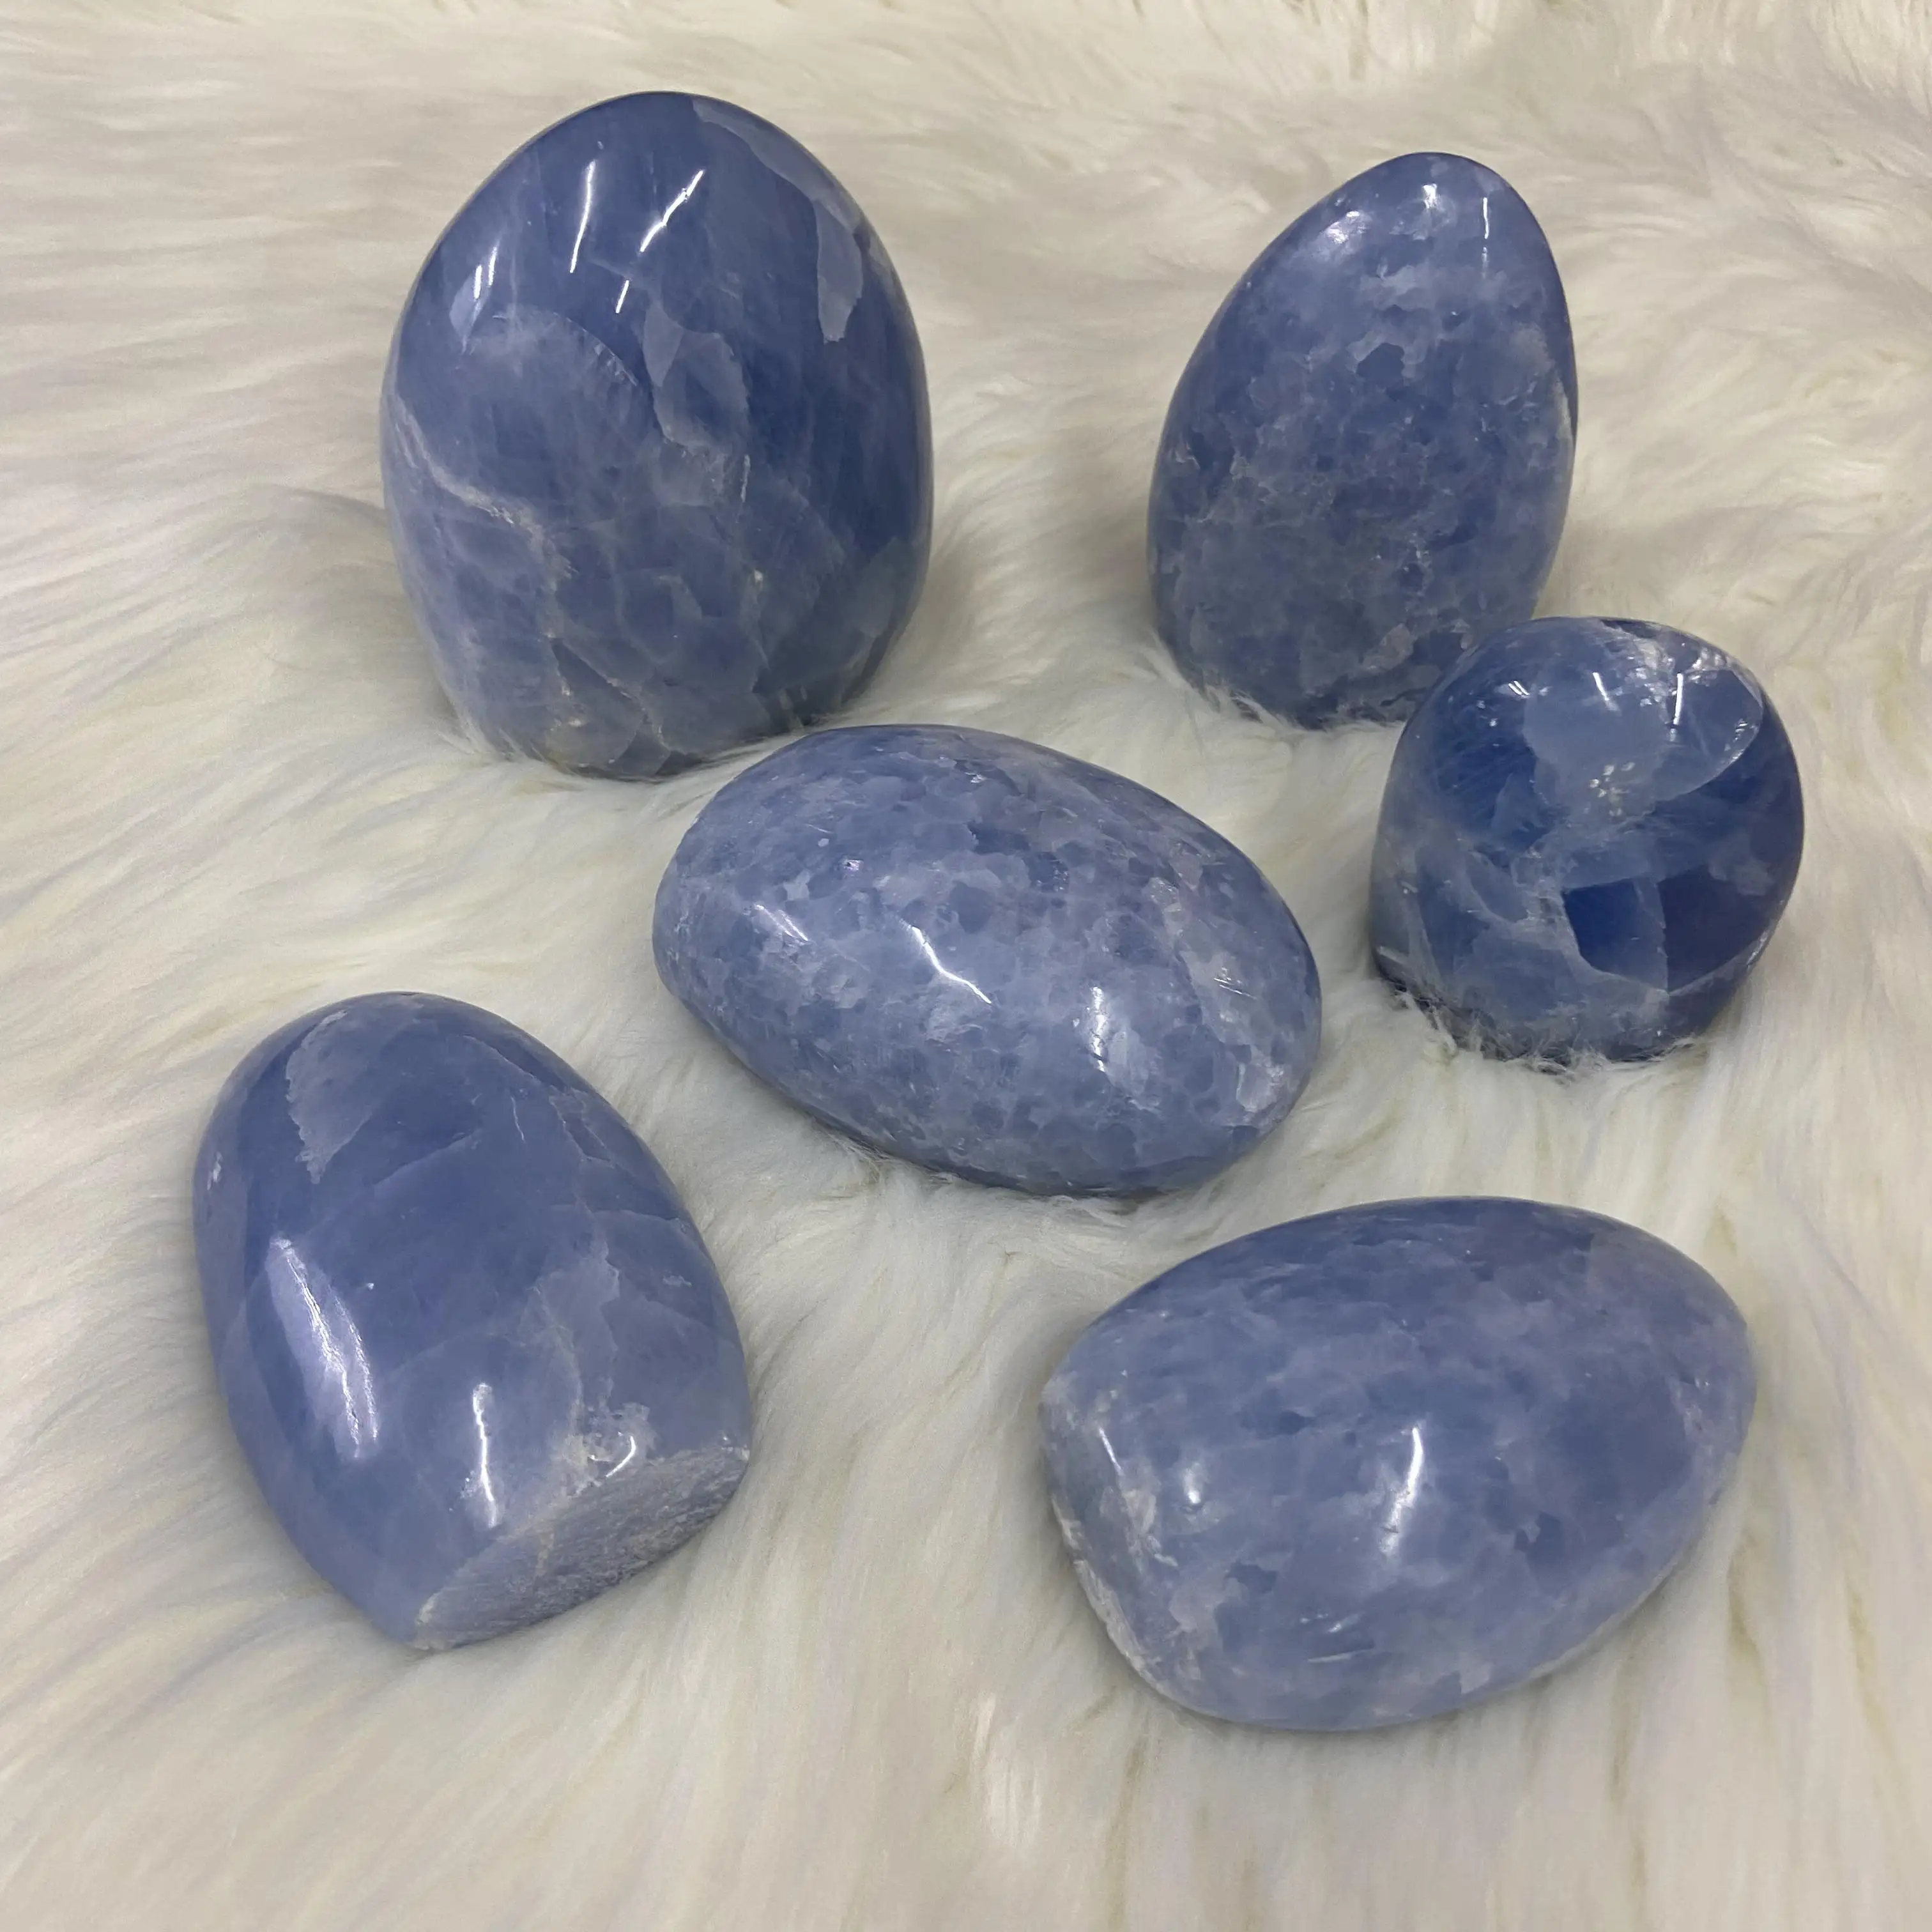 Wholesale Natural High Quality Celestite Freeform Standing Stones Blue Calcite Celestite Freeform For Home Decoration